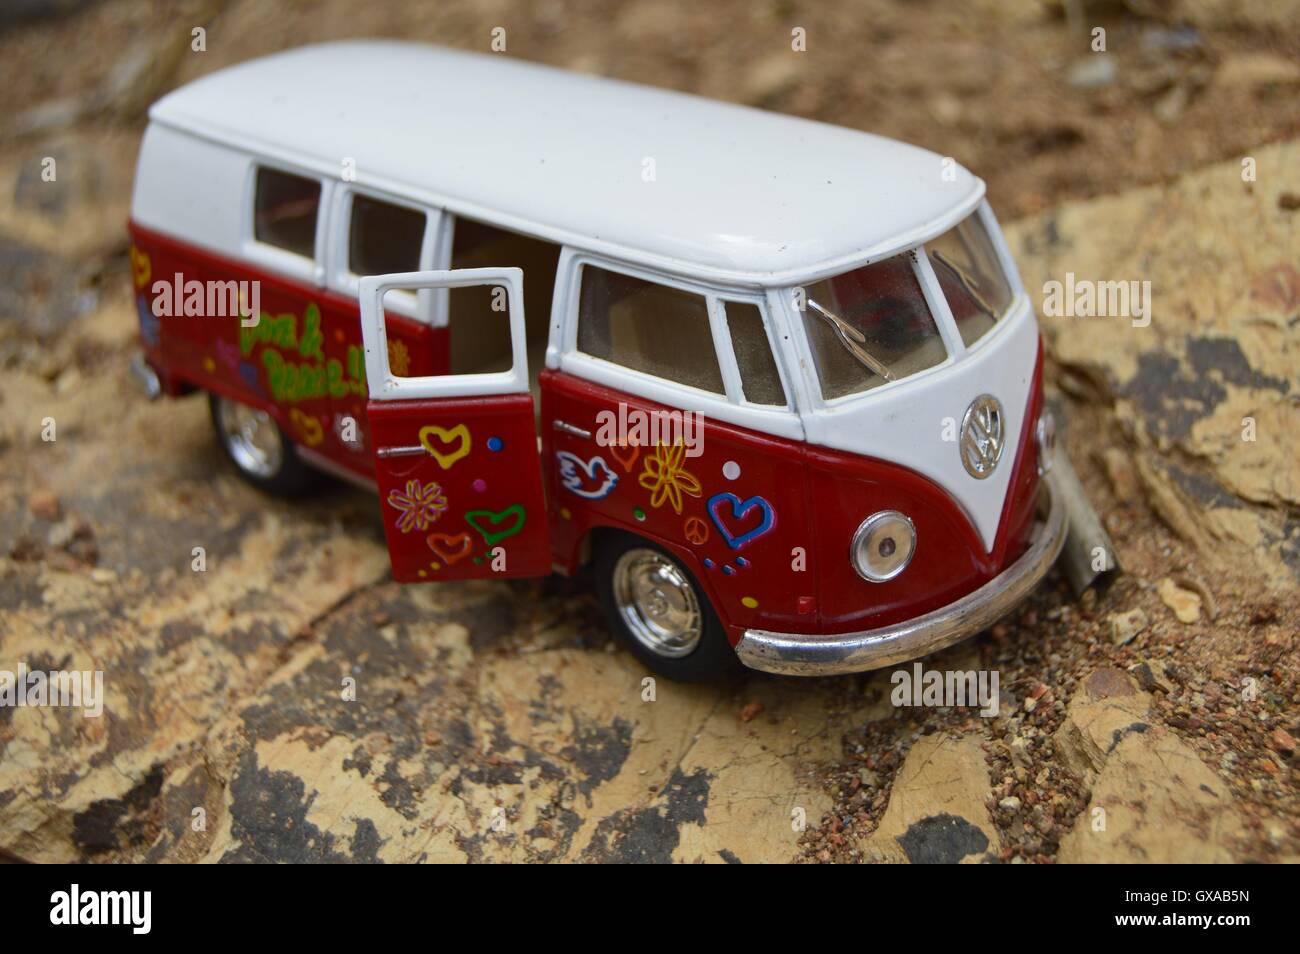 German classic vans, toy on rocky 